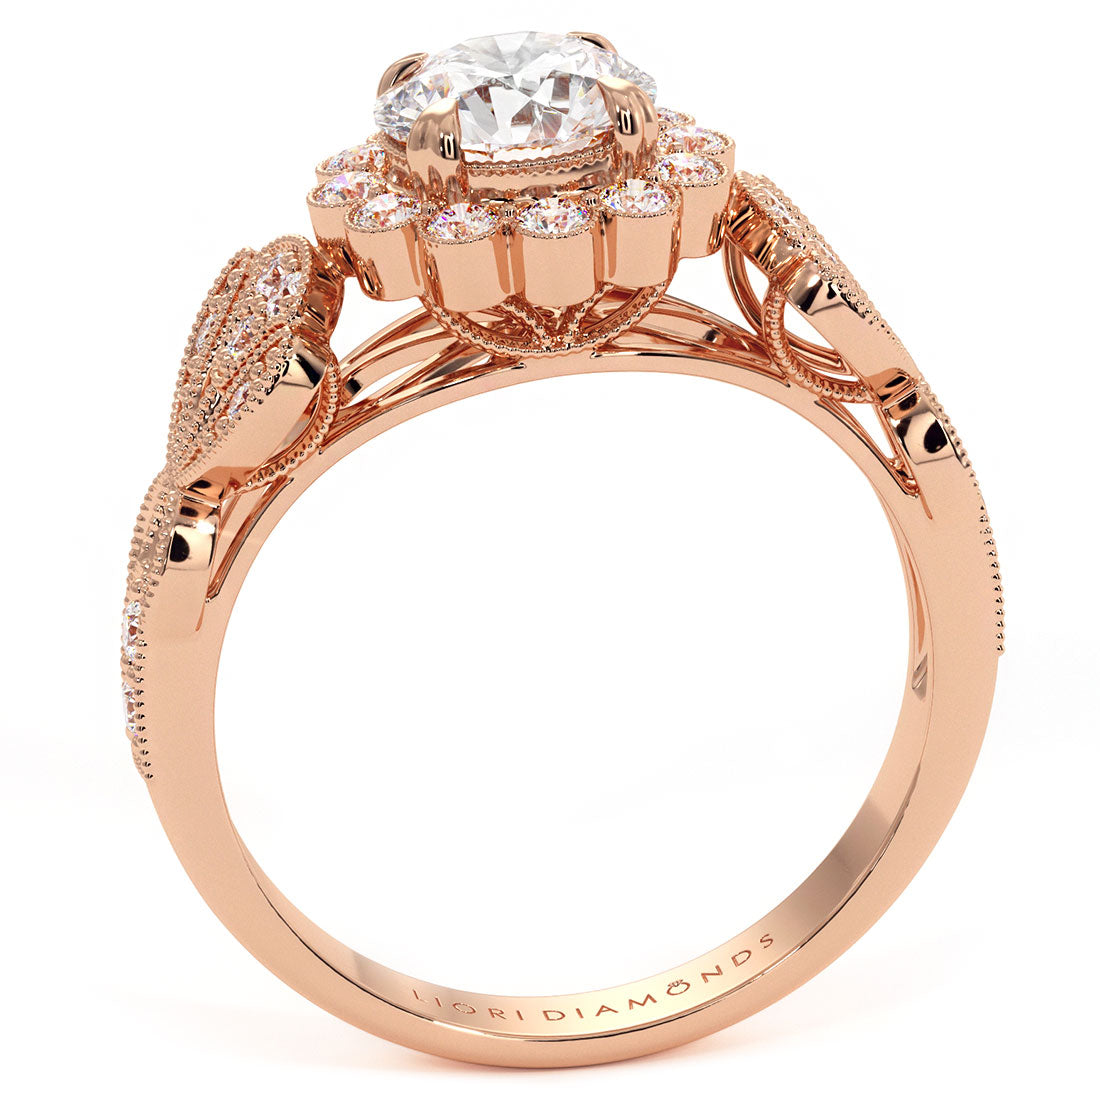 1.53 Carat H-SI1 Round Diamond Engagement Ring 14k Rose Gold Vintage Style